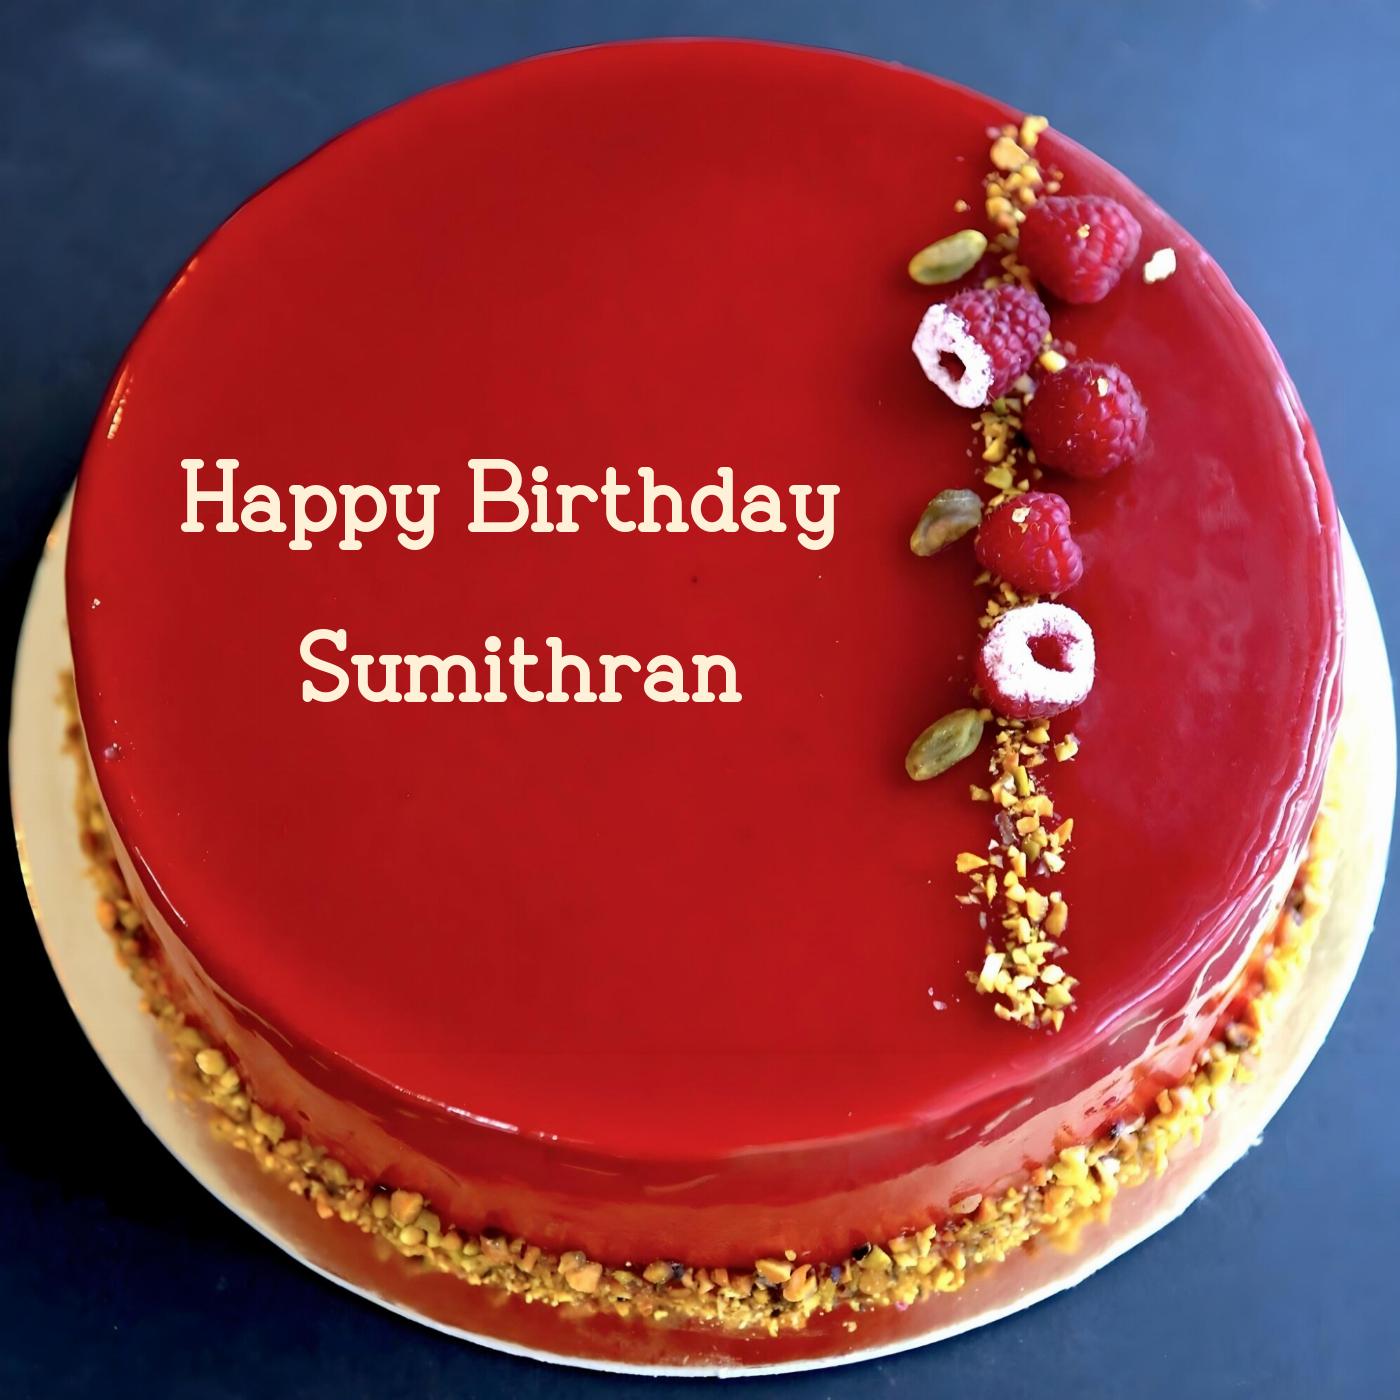 Happy Birthday Sumithran Red Raspberry Cake